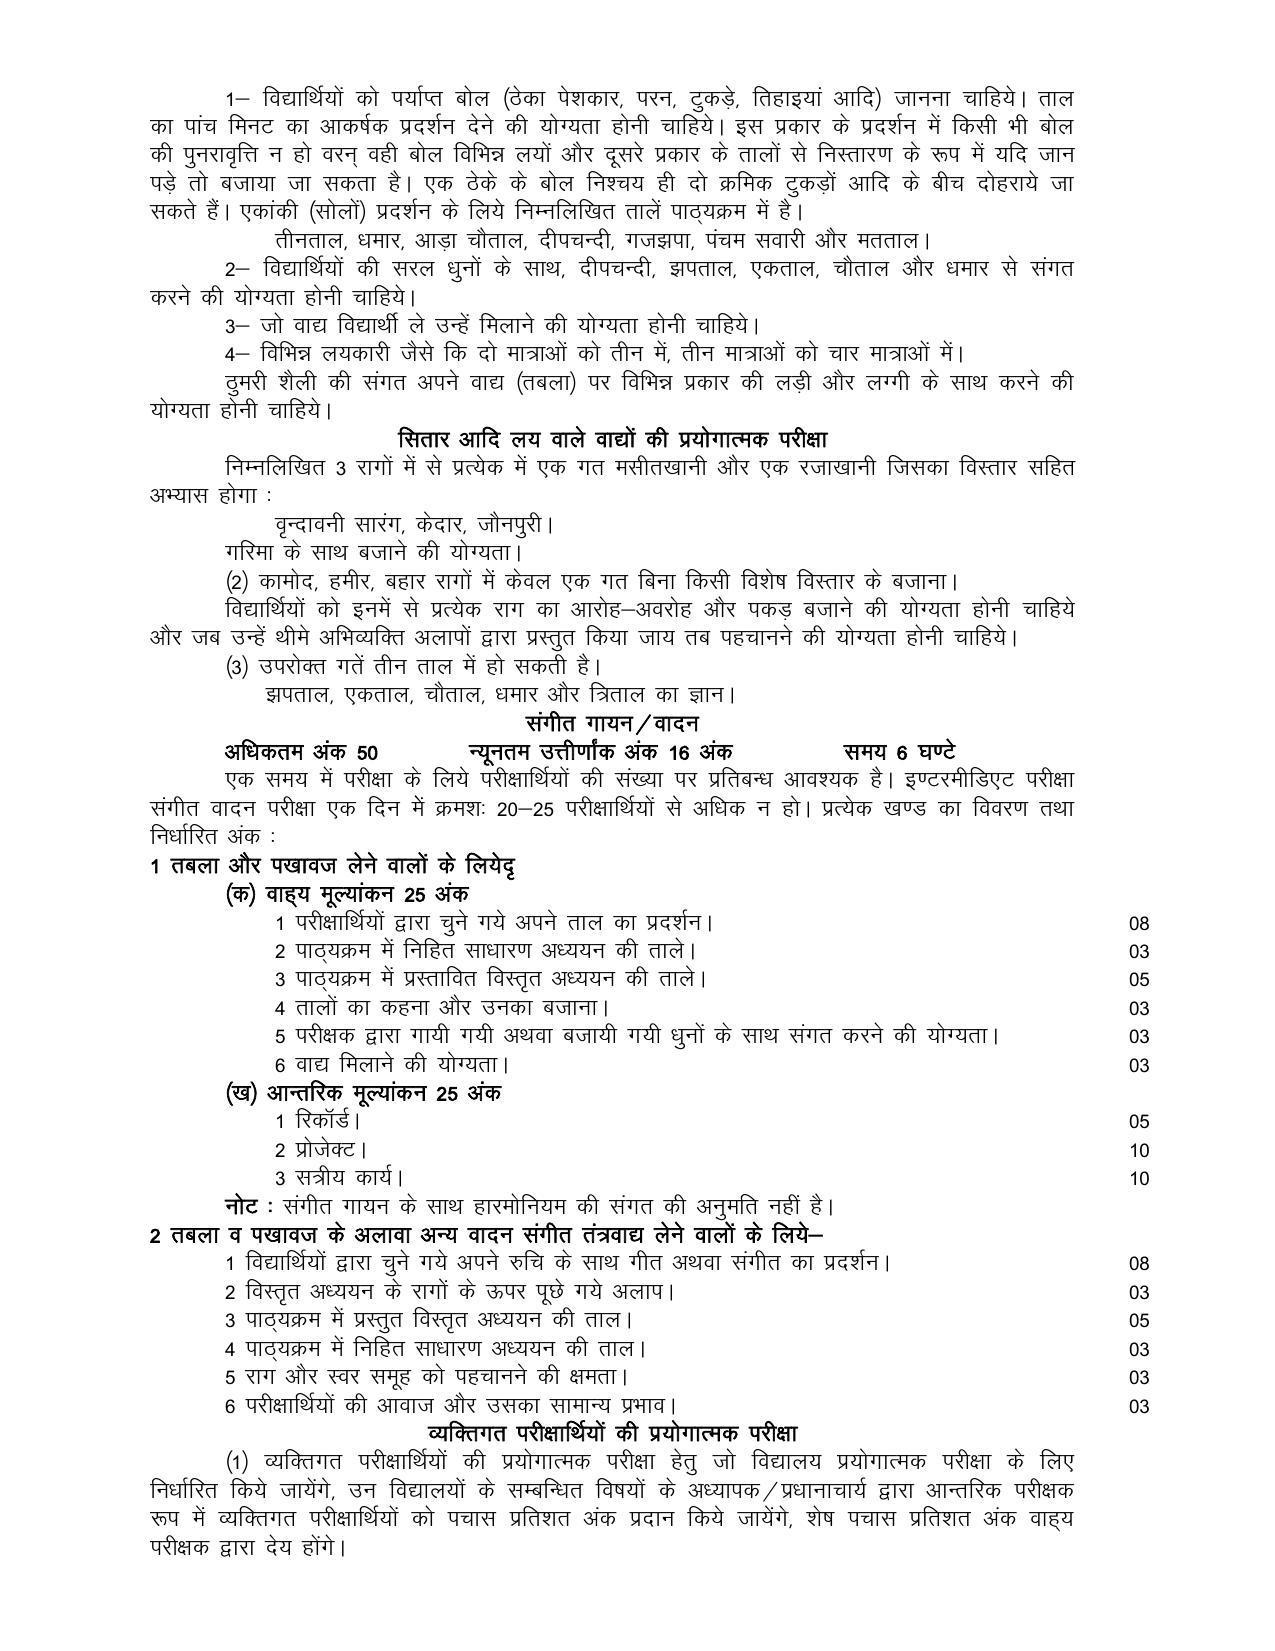 UP Board Class 12 Syllabus Sangeet (Vadan) - Page 2